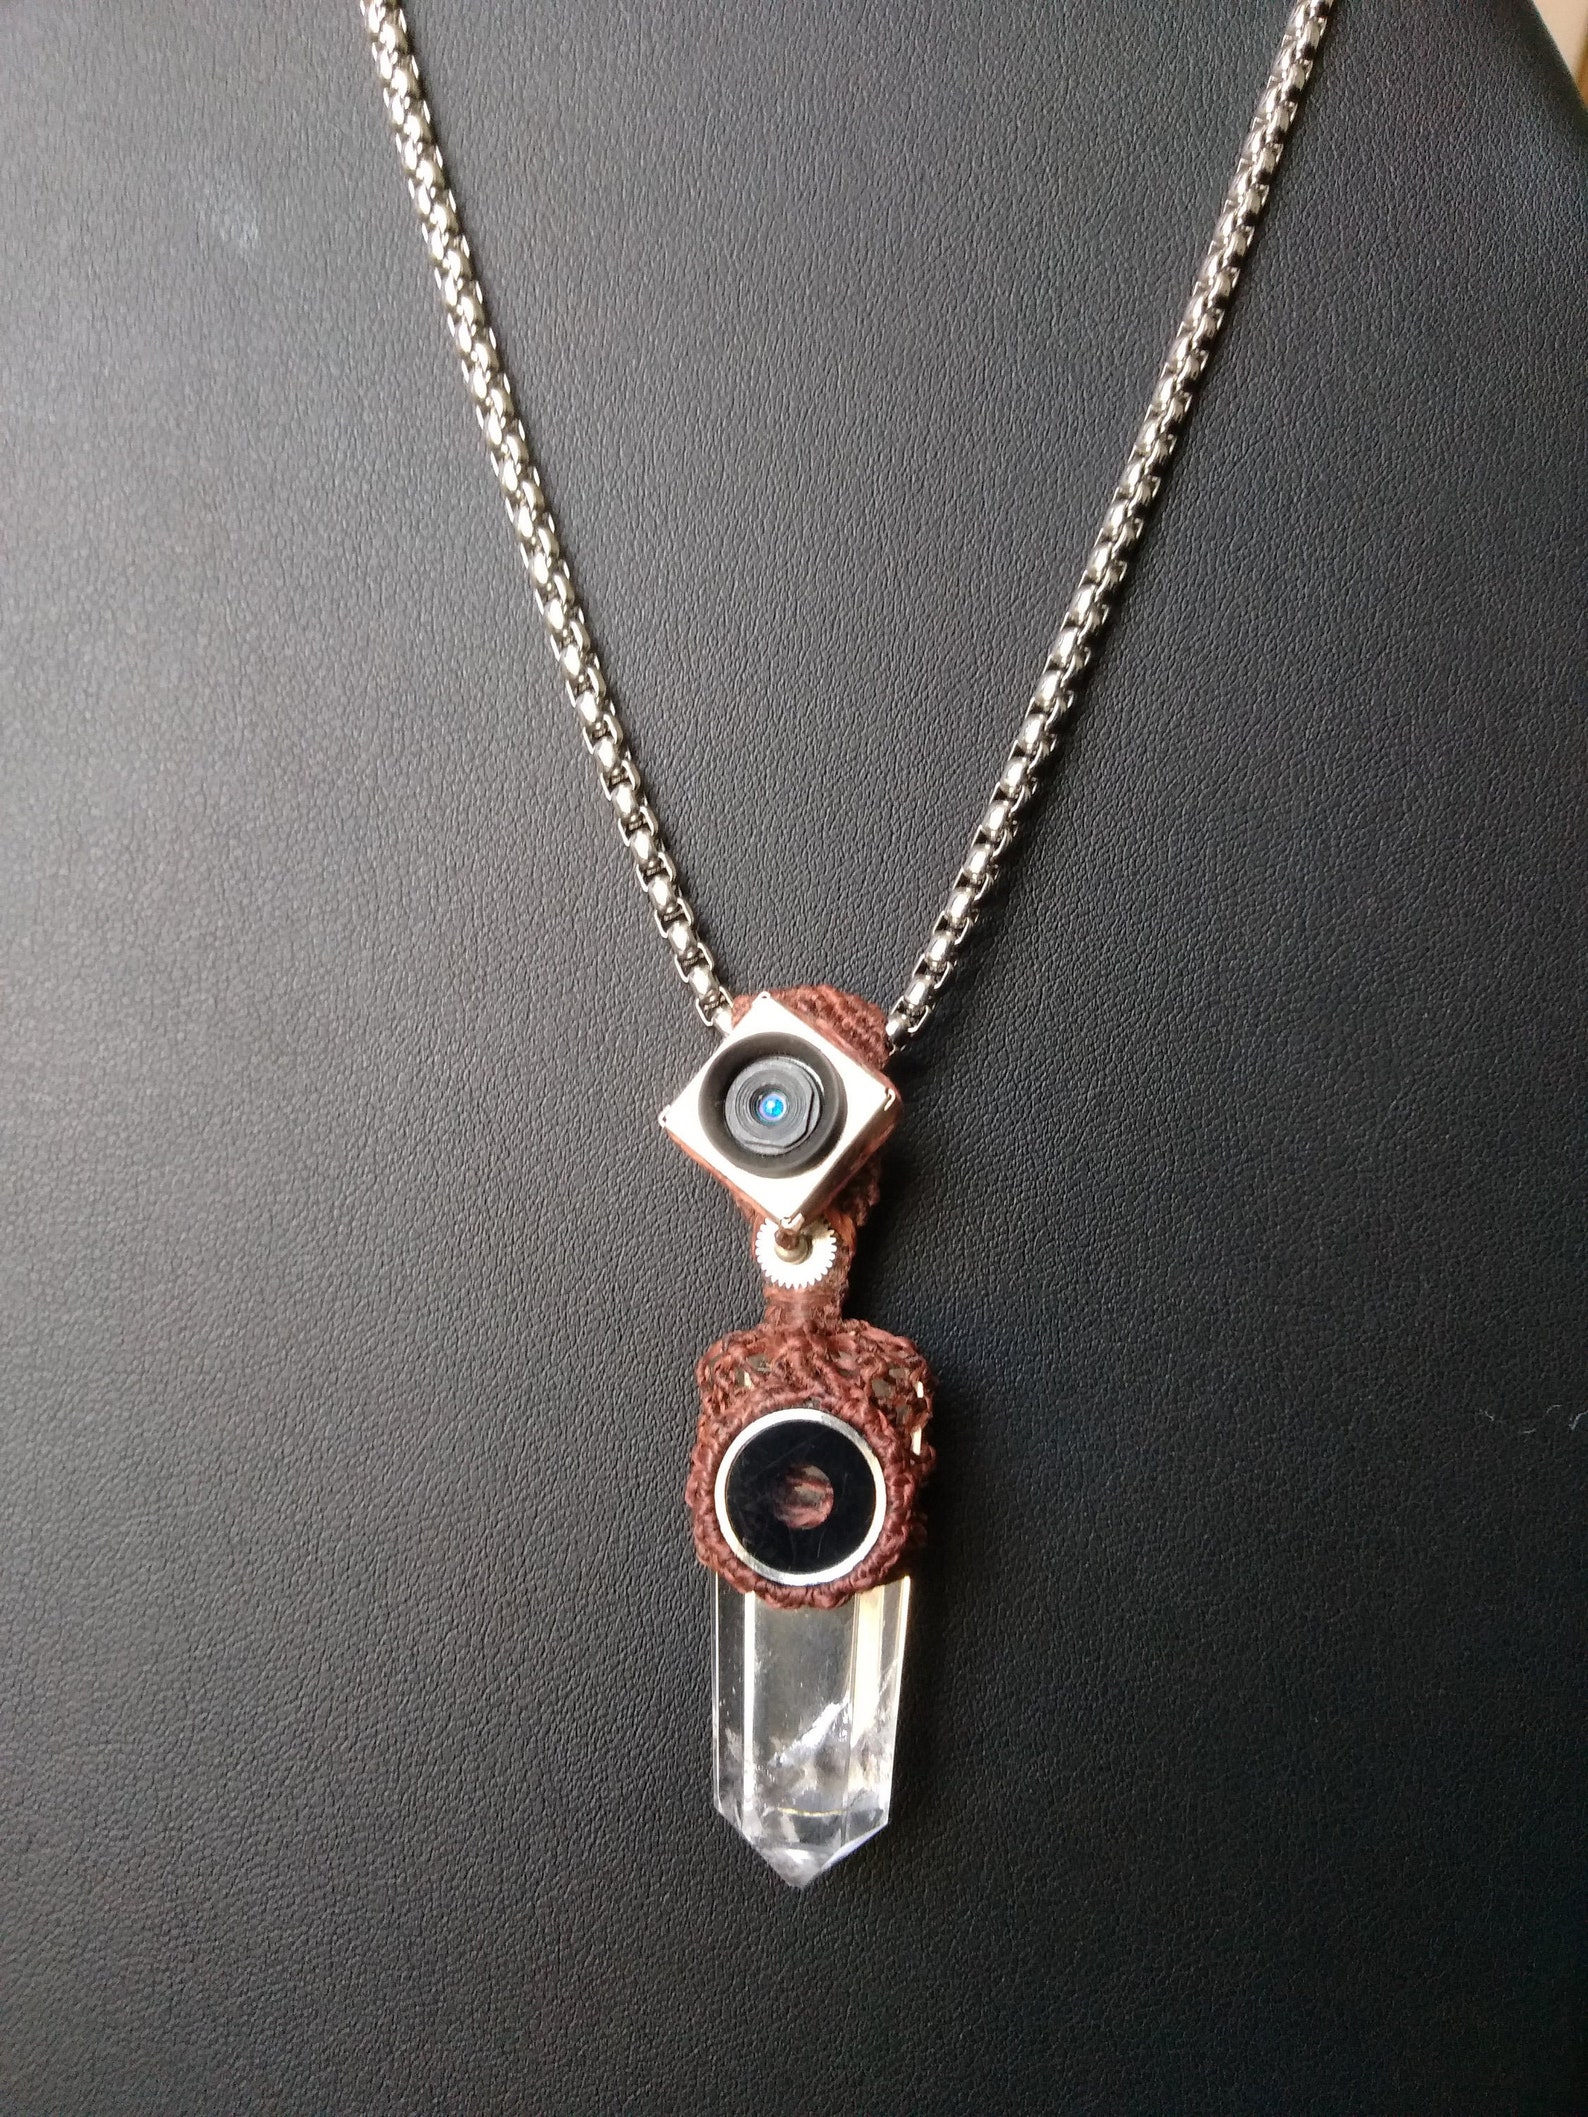 Spy Camera Necklace Crystal Quartz Chain Necklace Micro | Etsy